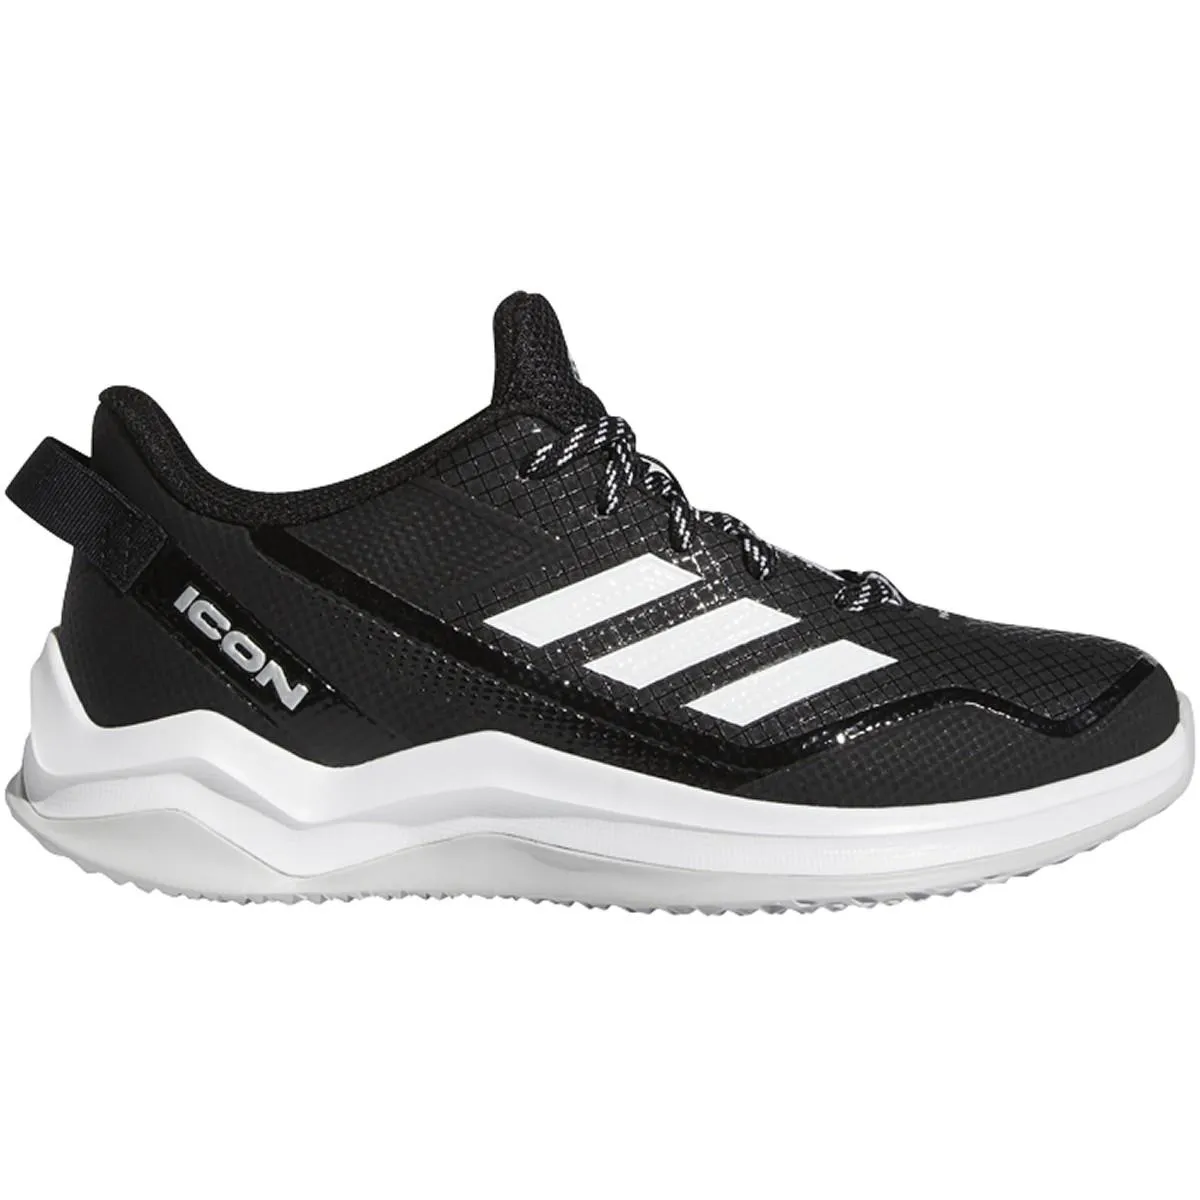 E184388 Adidas Icon 7 Turf Kids Baseball Shoes